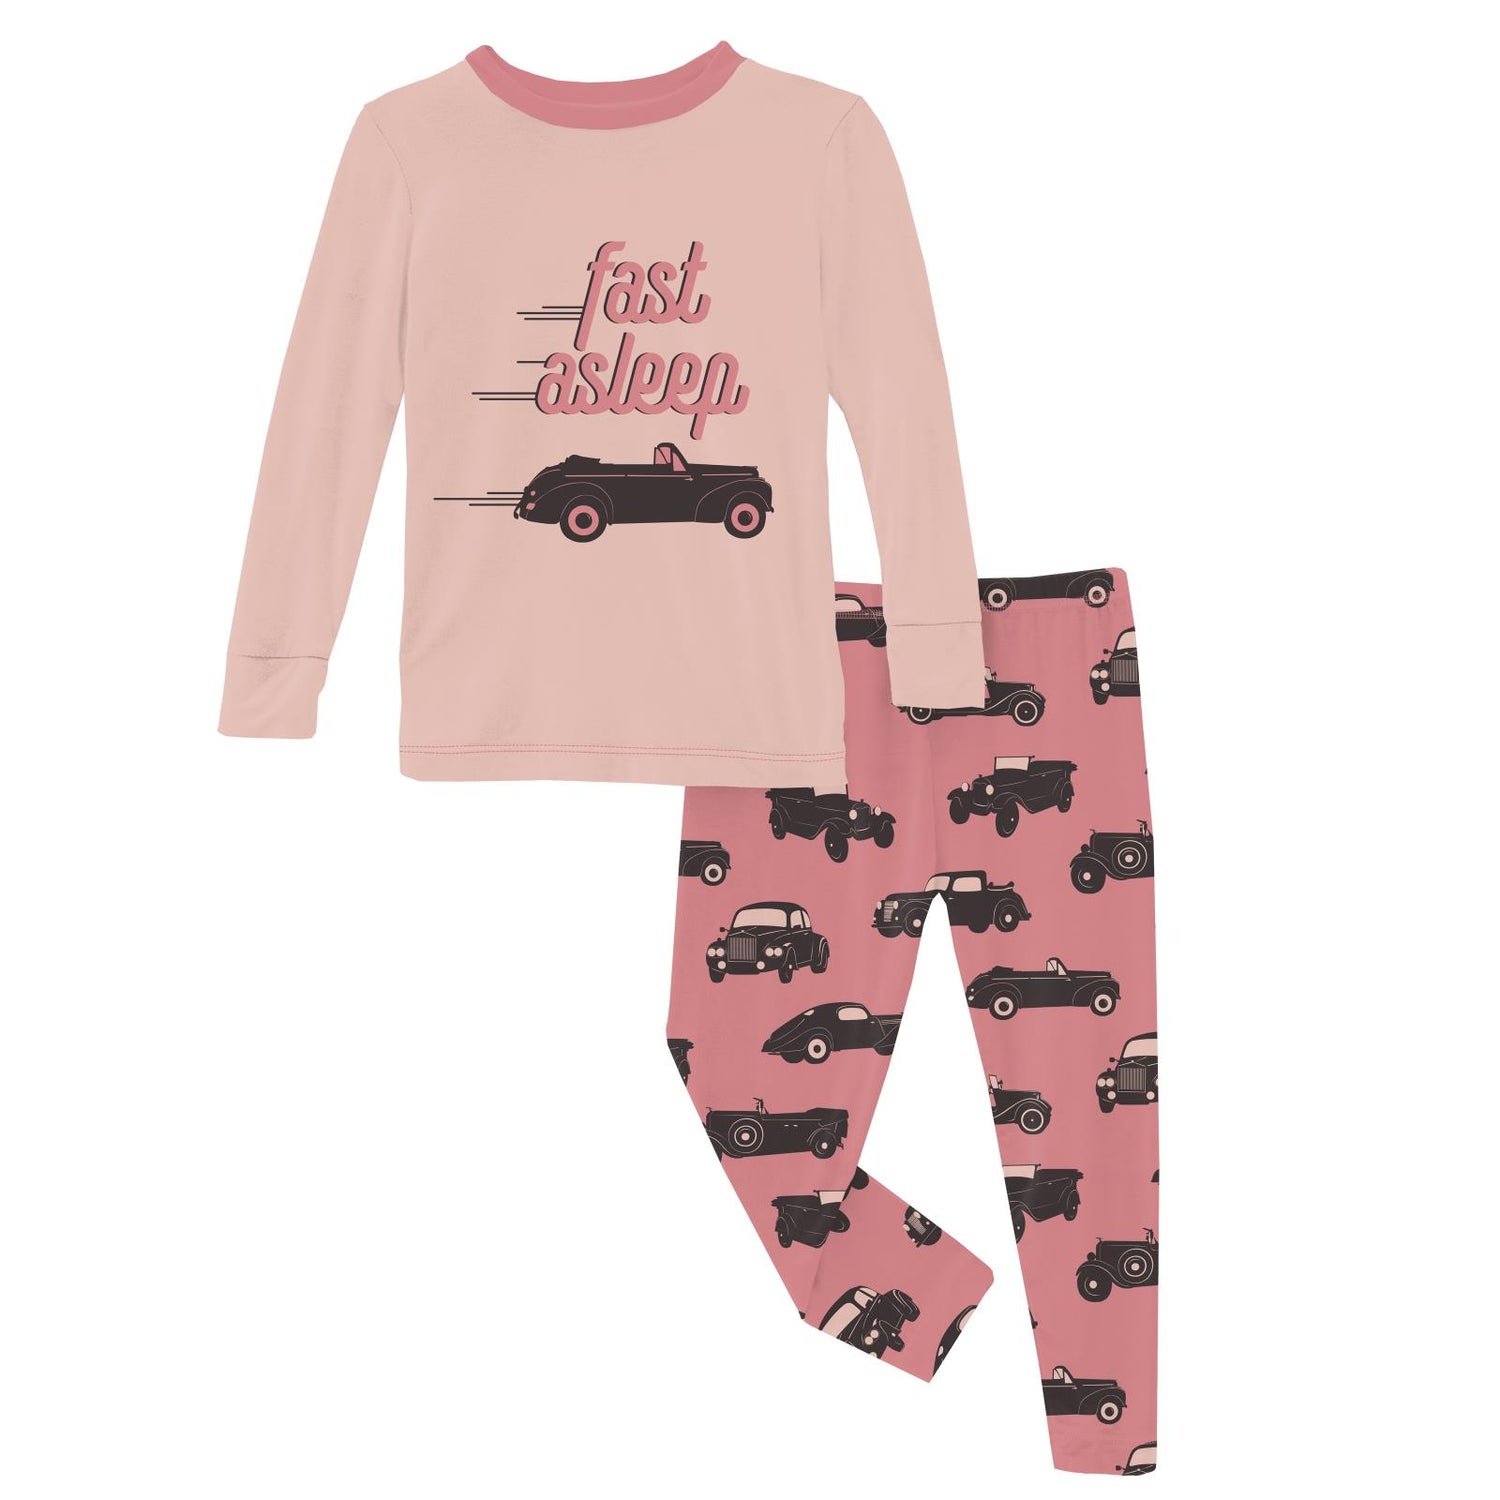 Long Sleeve Graphic Tee Pajama Set in Desert Rose Vintage Cars